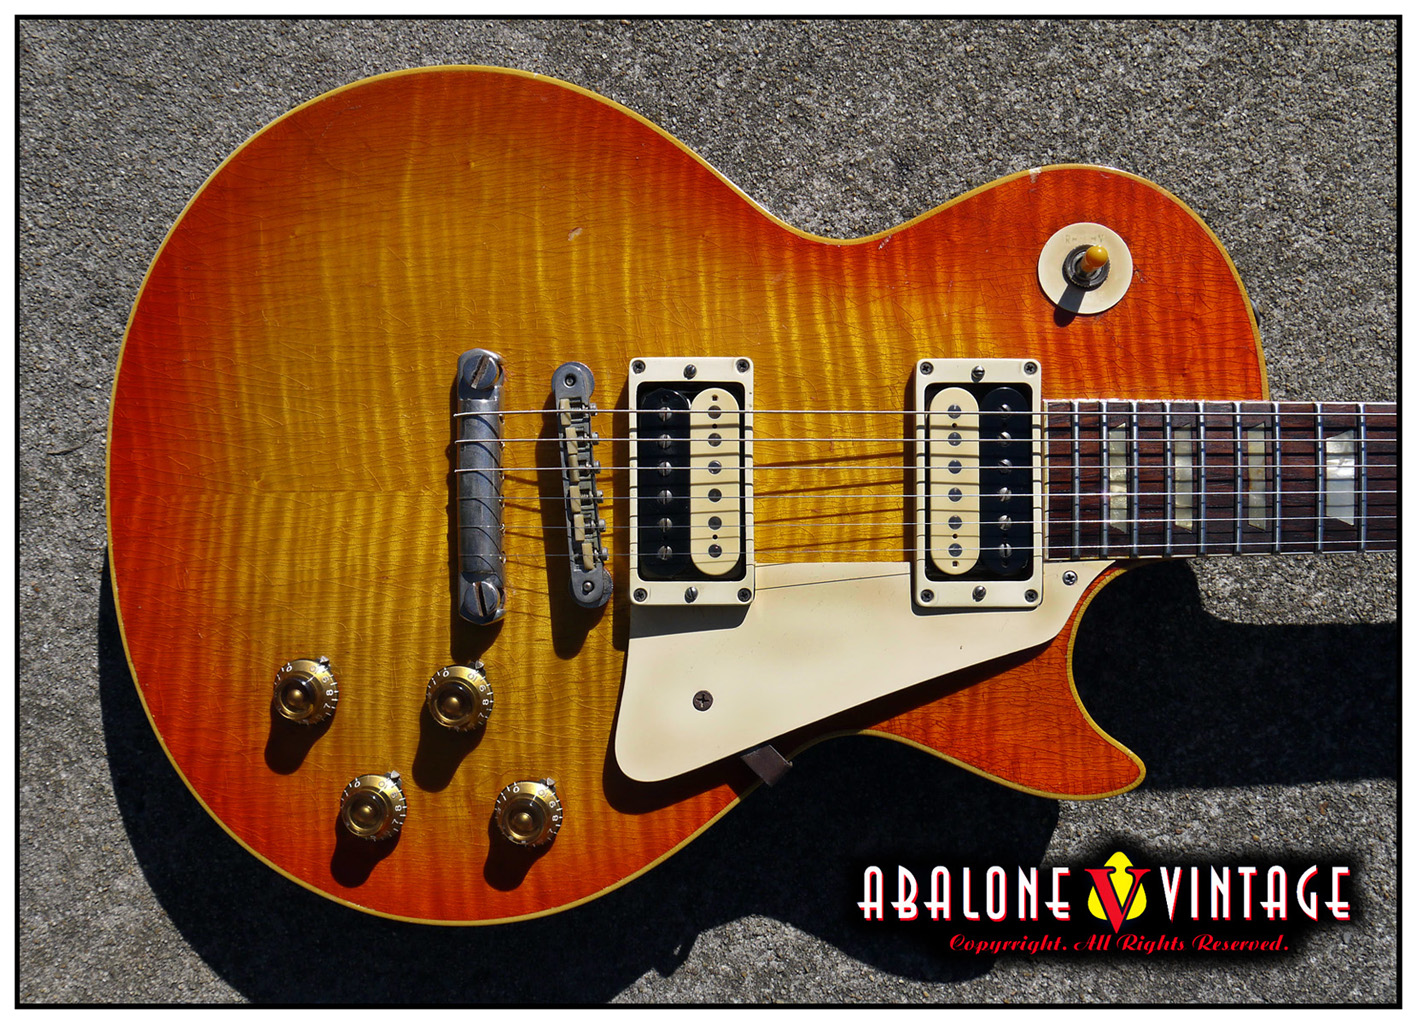 Indsigt Dødelig bænk photos of Fake 1959 Gibson Les Paul guitars Forgery Replicas